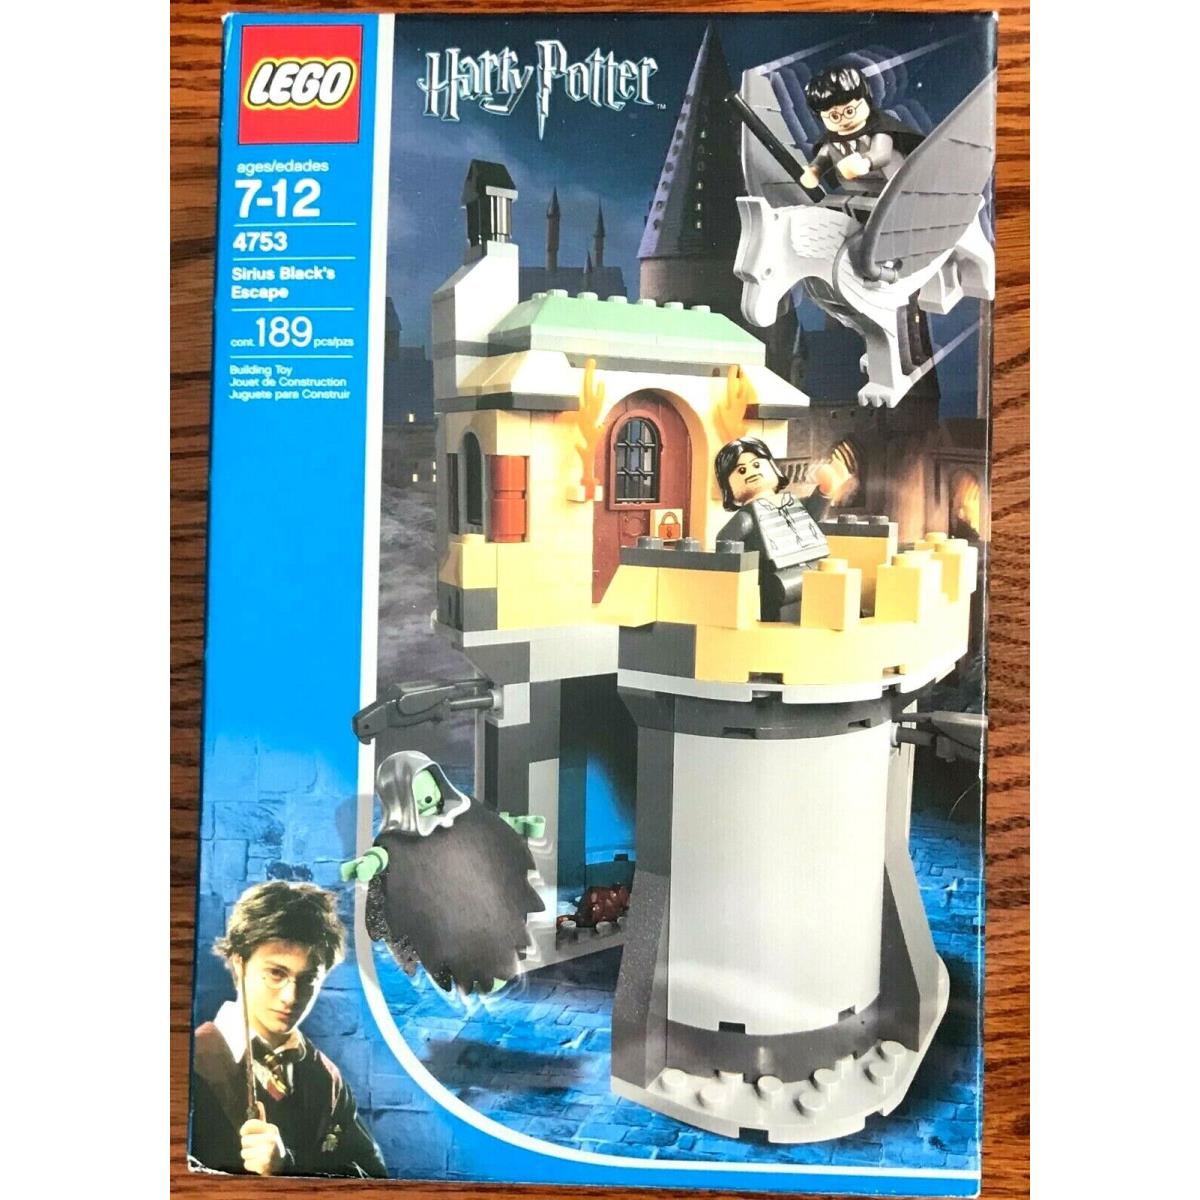 Lego Harry Potter Sirius Black`s Escape Set 4753